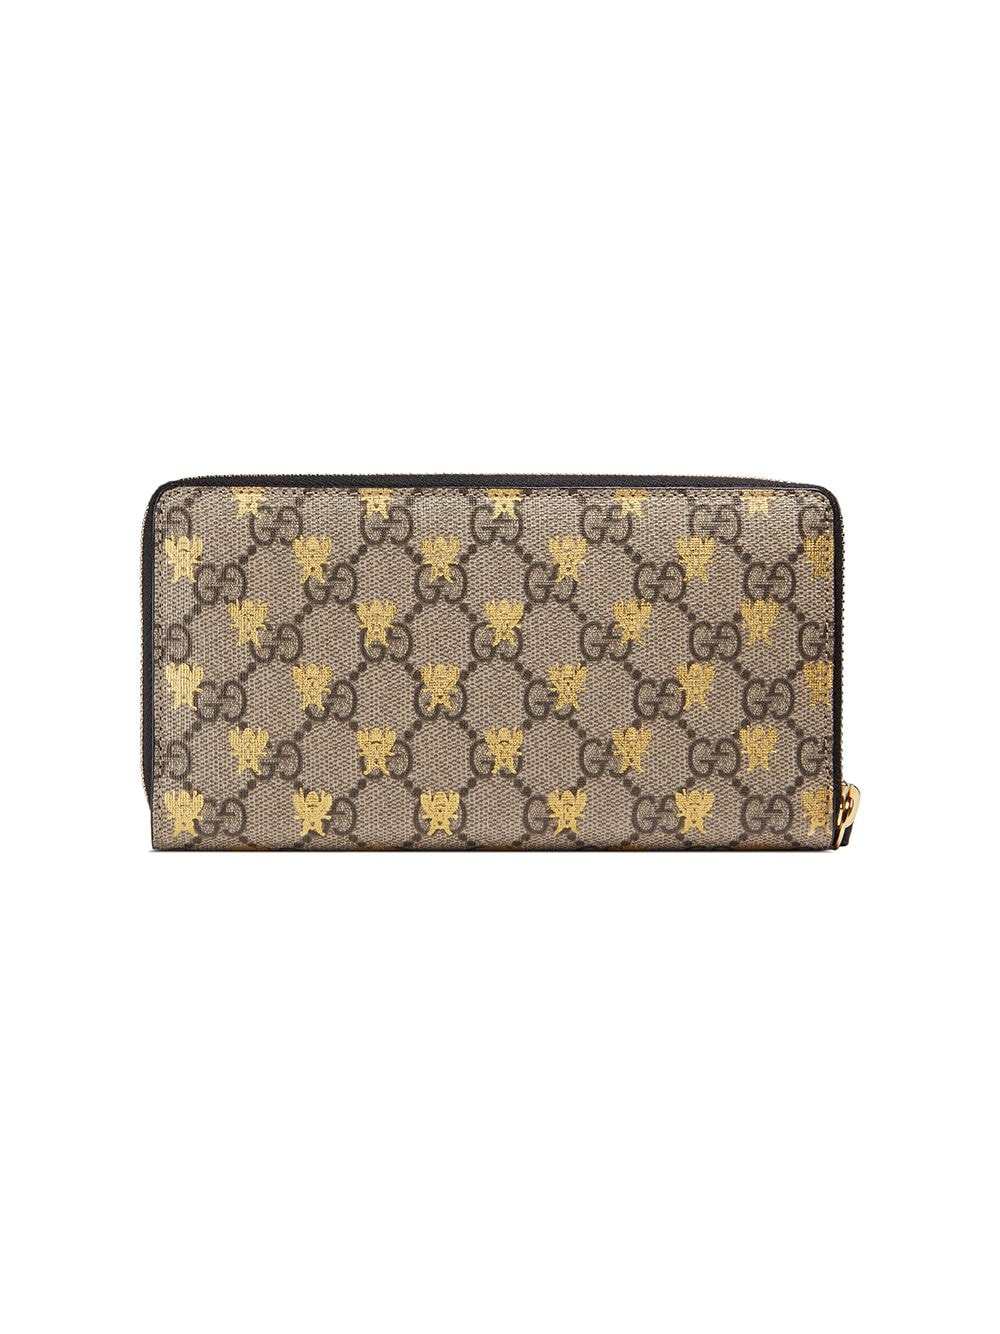 Gucci Gg Supreme Bees Zip Around Wallet Ss20 | Farfetch.com